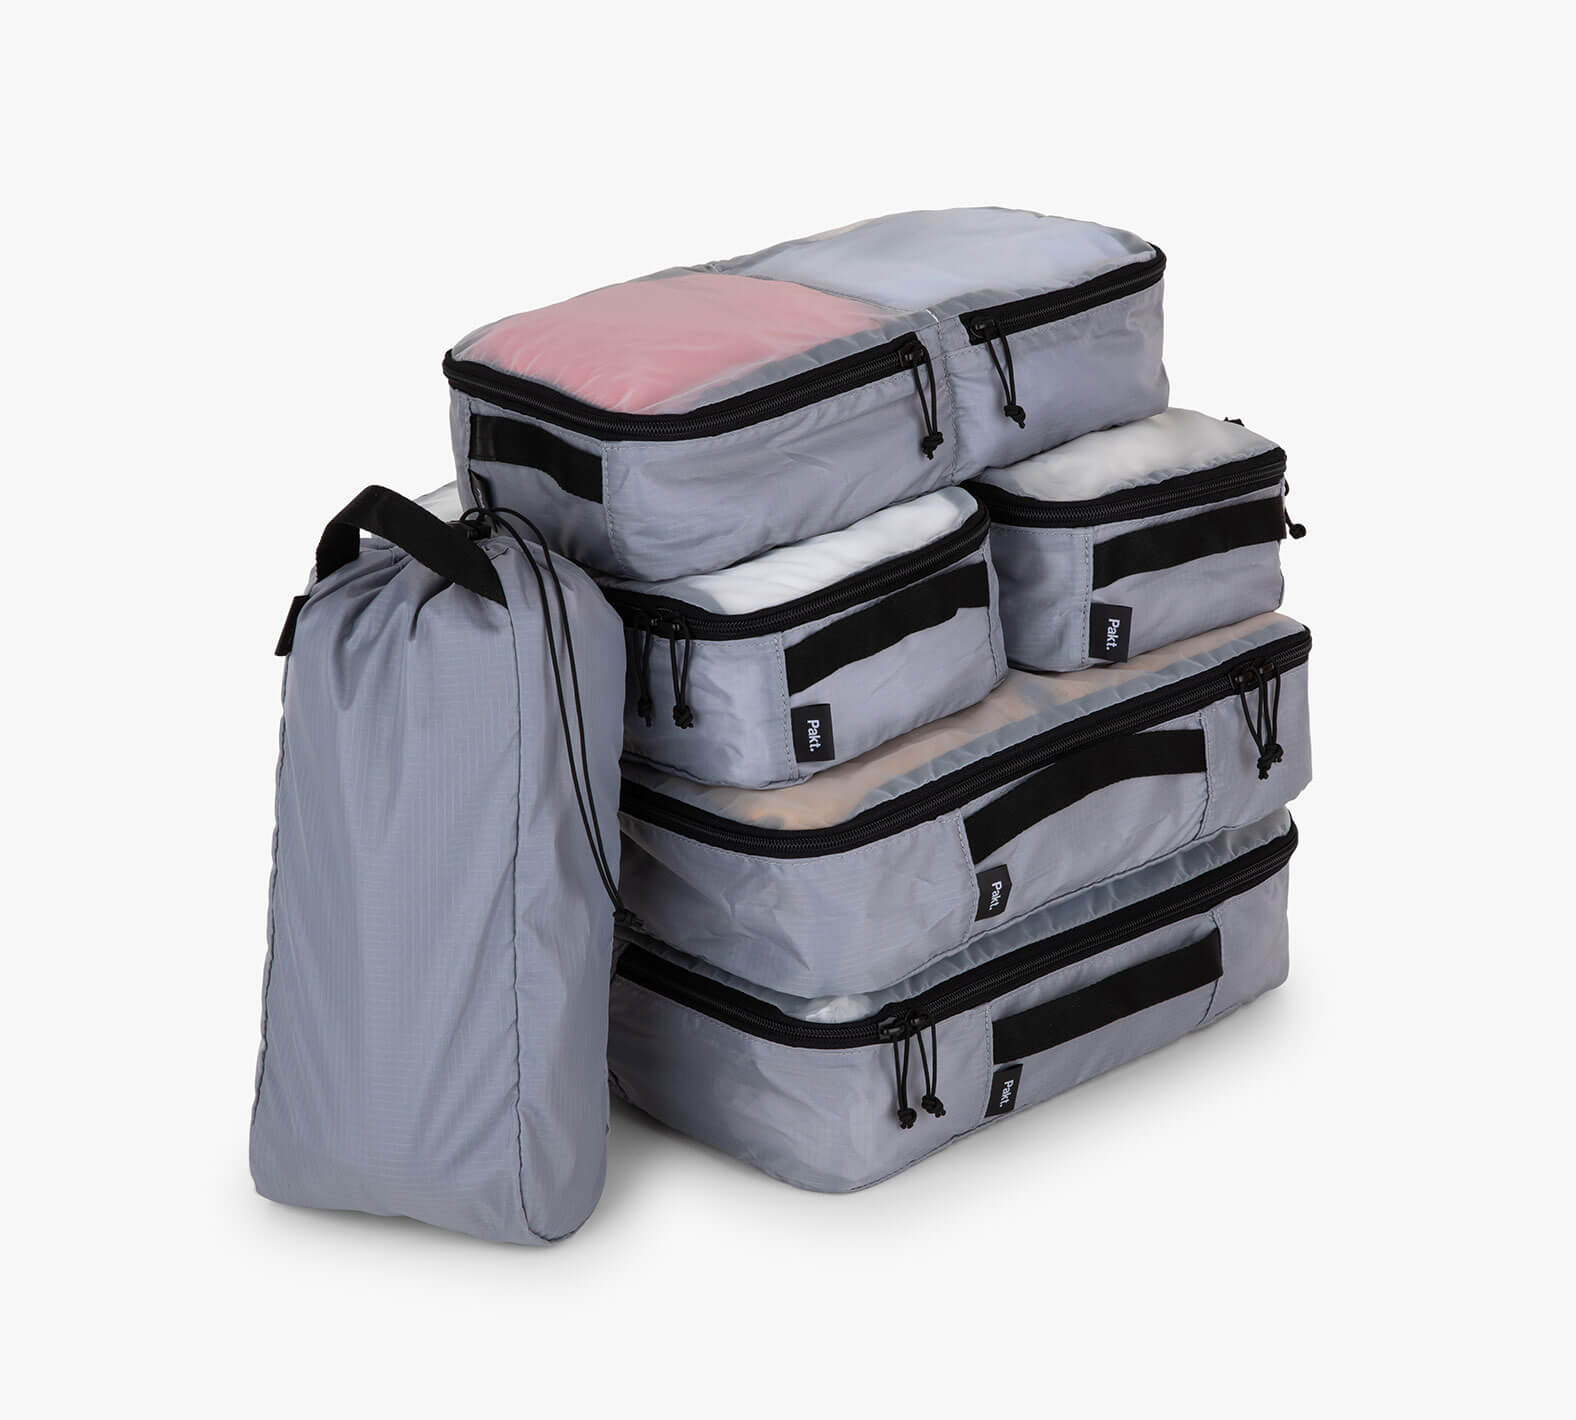 Bag-all Packing Cubes - Set of 3 - Black